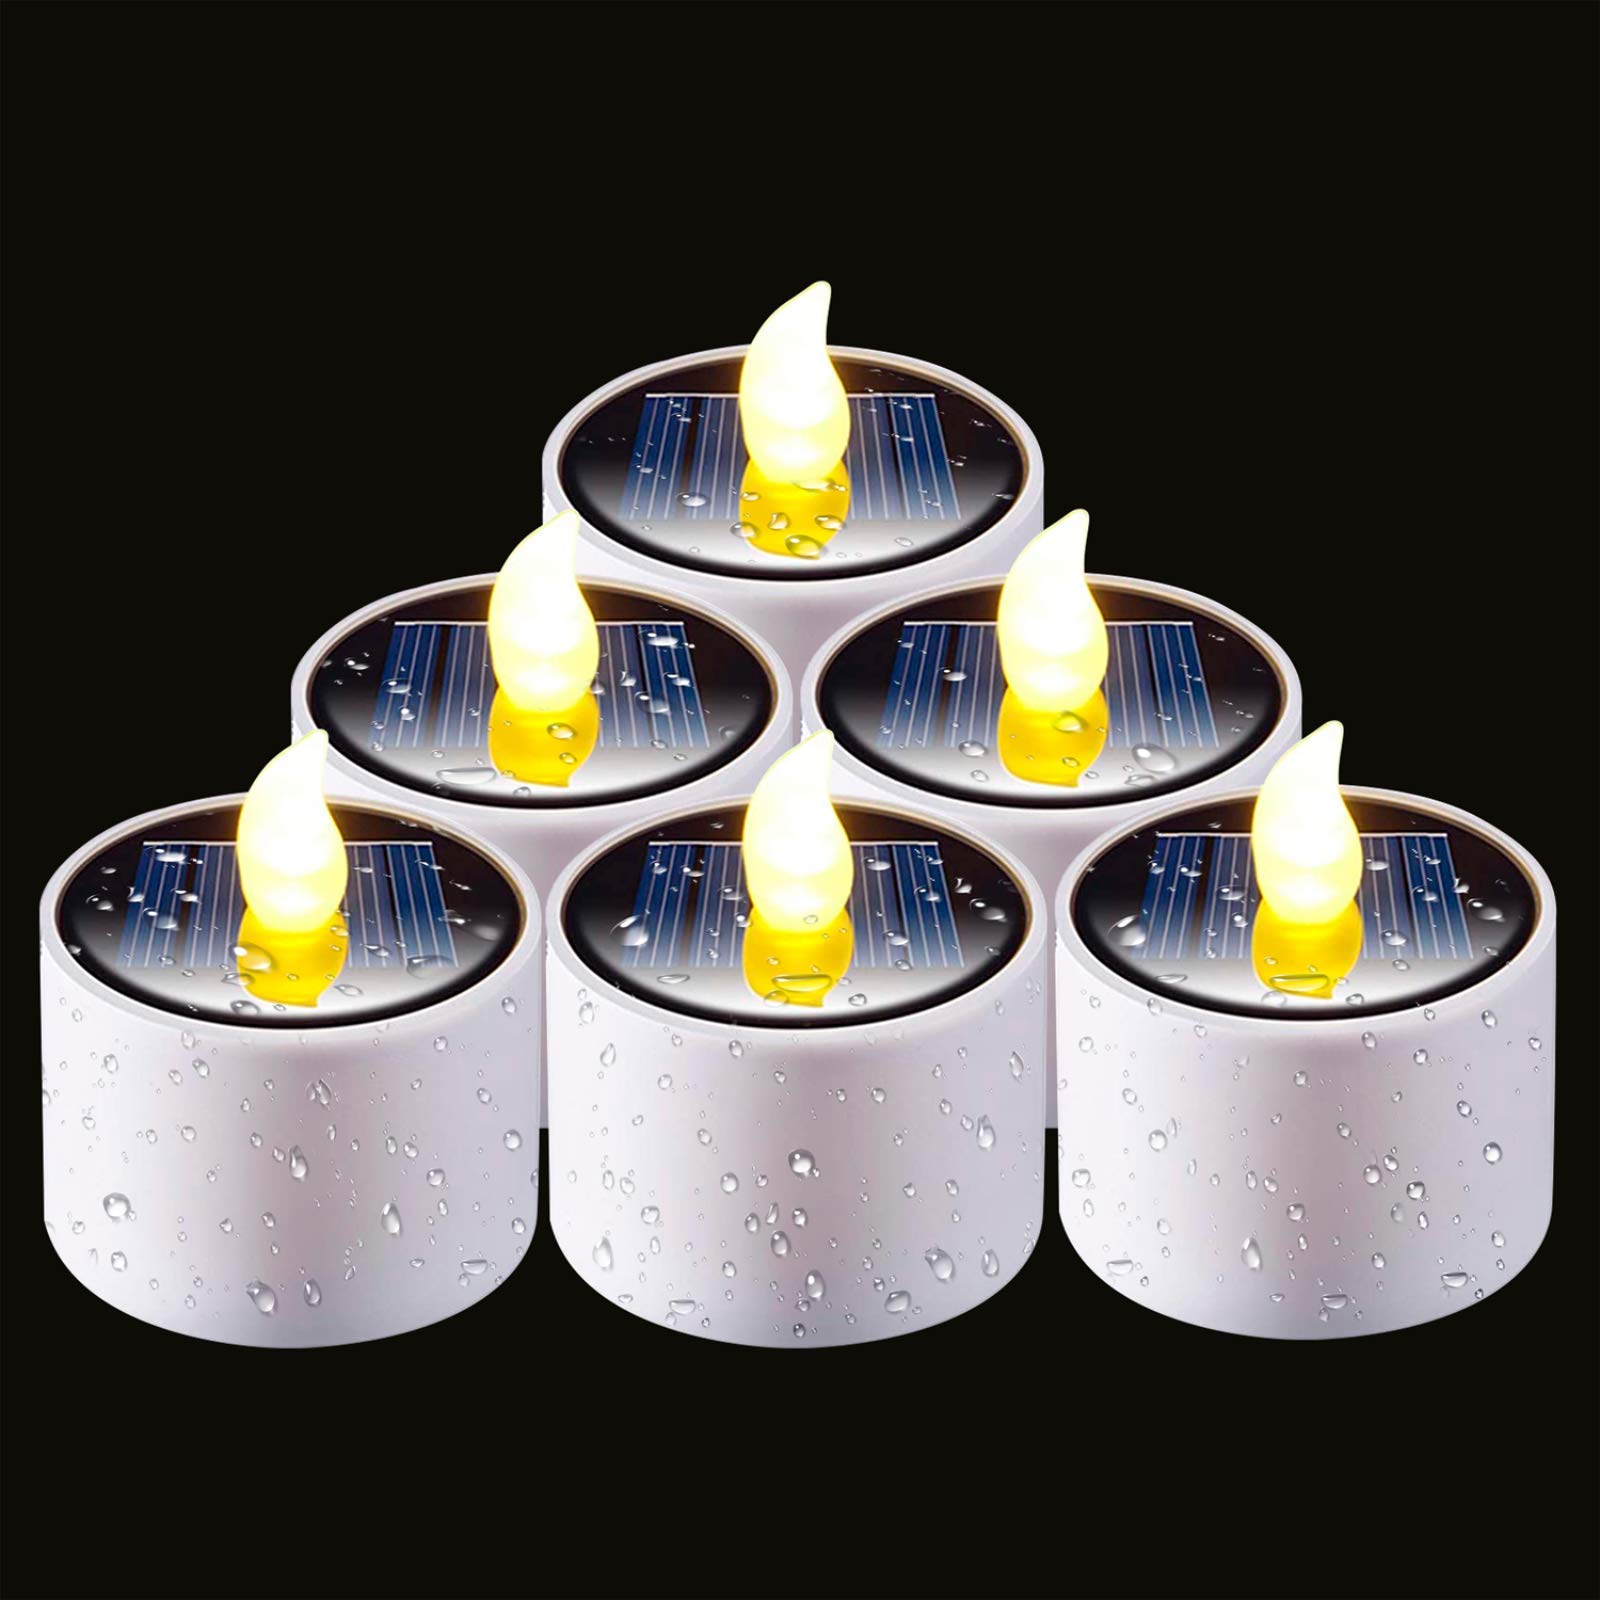 PChero 6pcs Solar Tea Lights, Waterproof Rechargeable LED